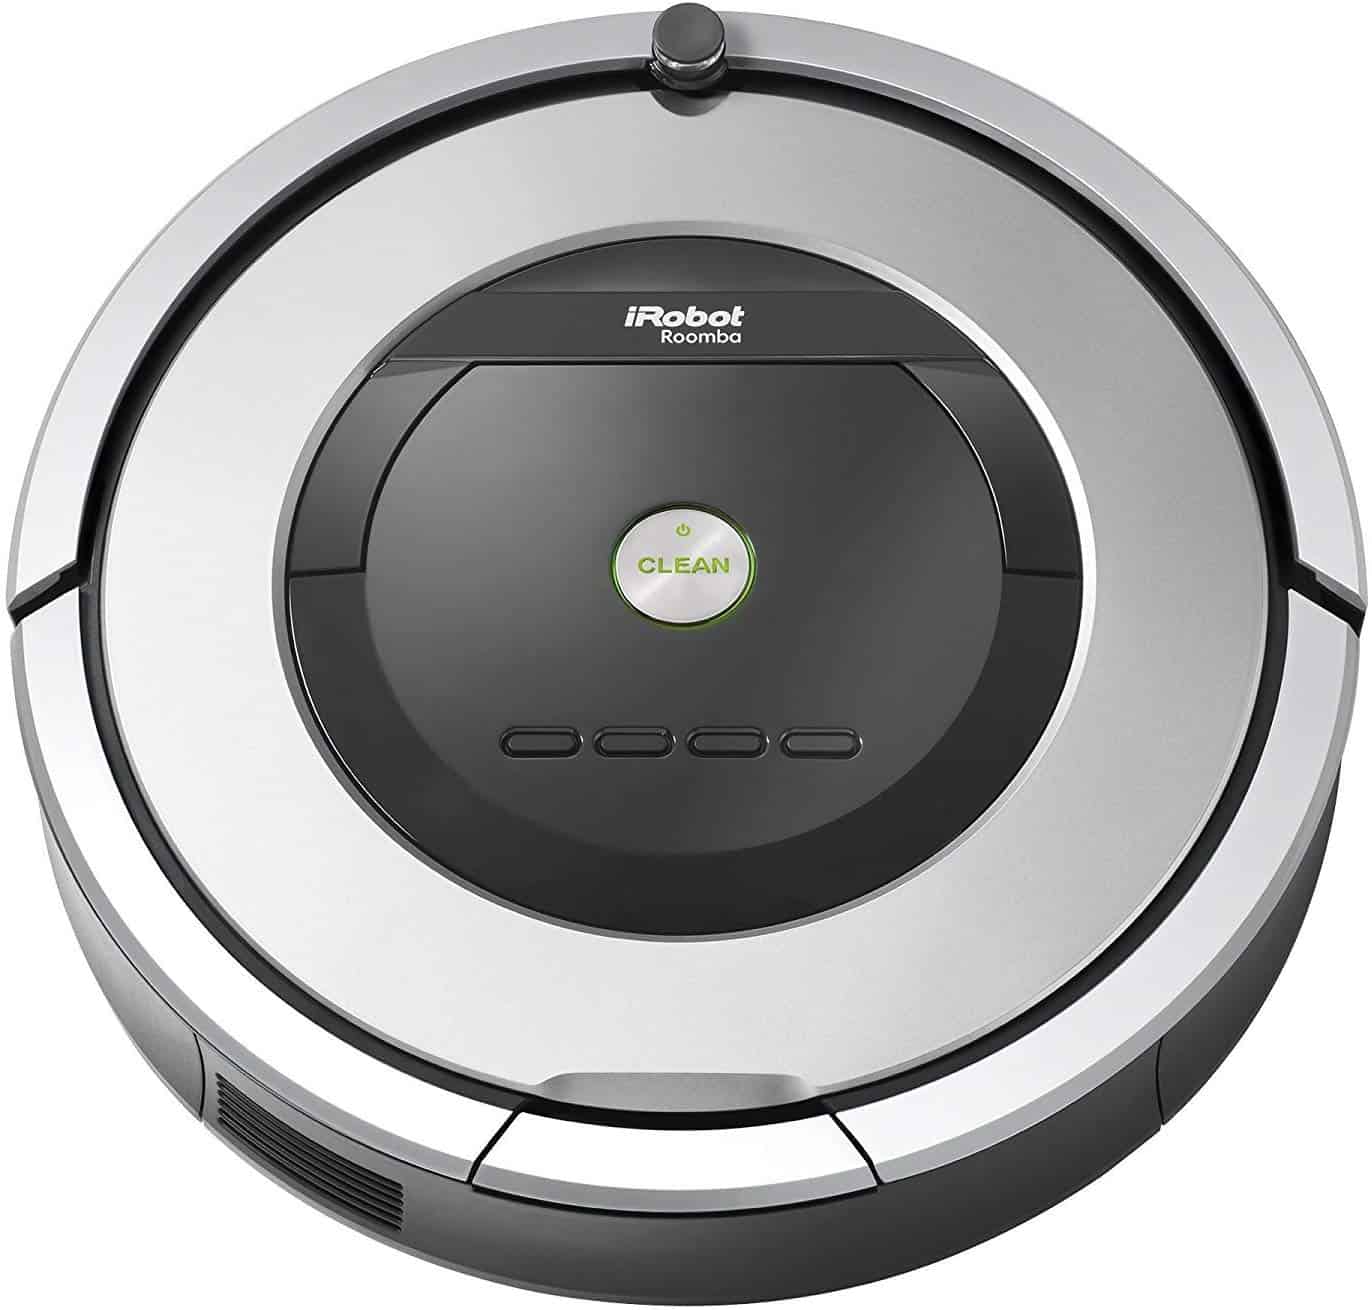 iRobot Roomba 860 Robotic Vacuum ONLY $264.99 (Reg $450)